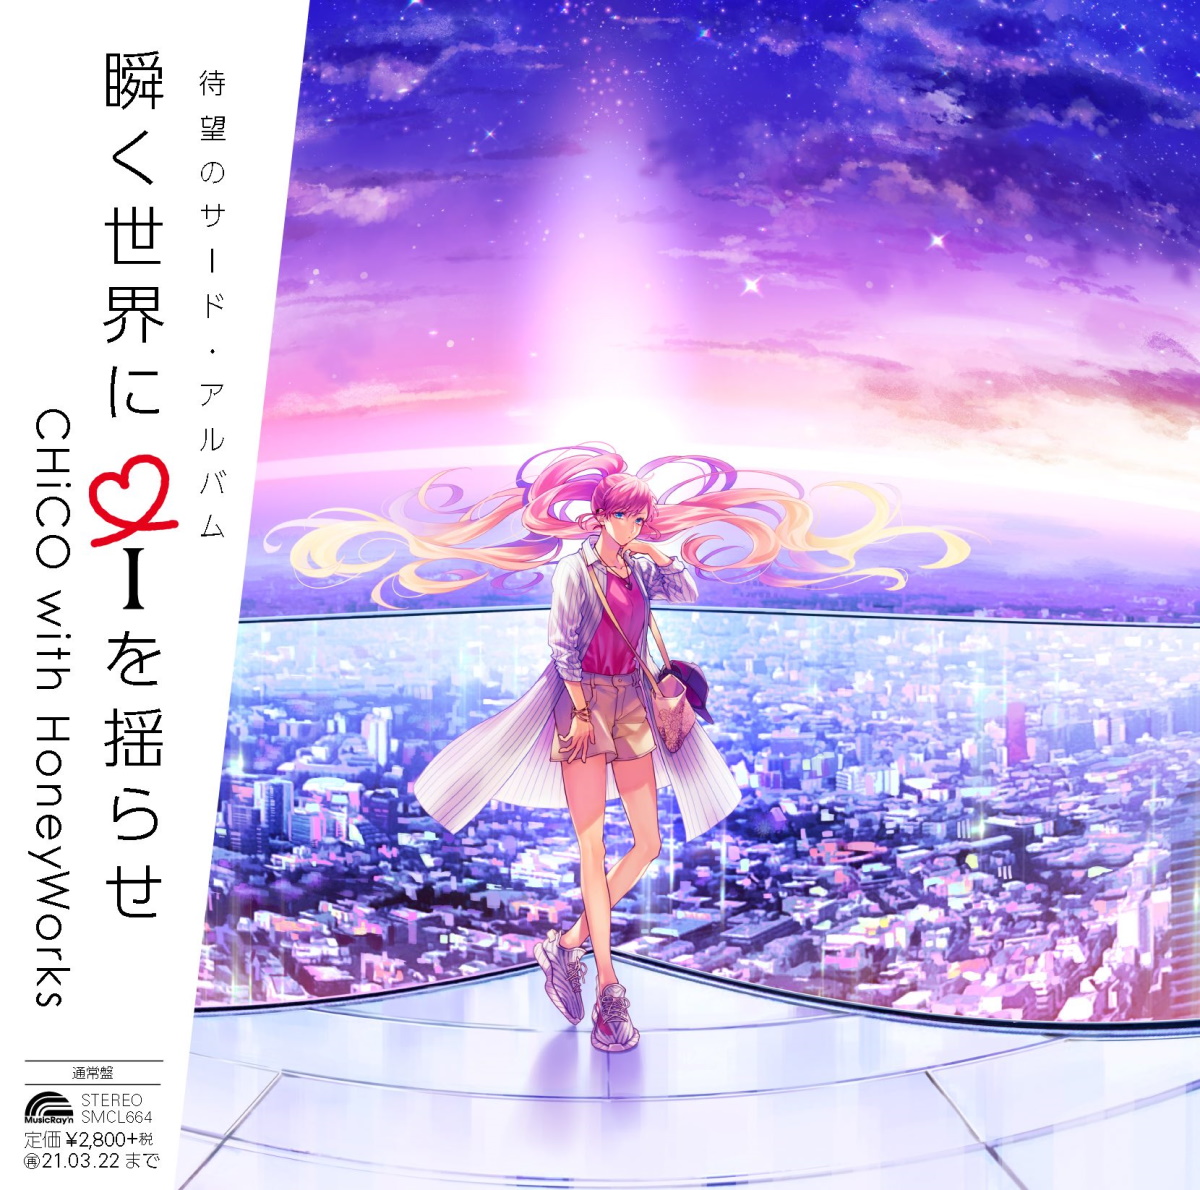 Cover for『CHiCO with HoneyWorks - Marie』from the release『Matataku Sekai ni i wo Yurase』